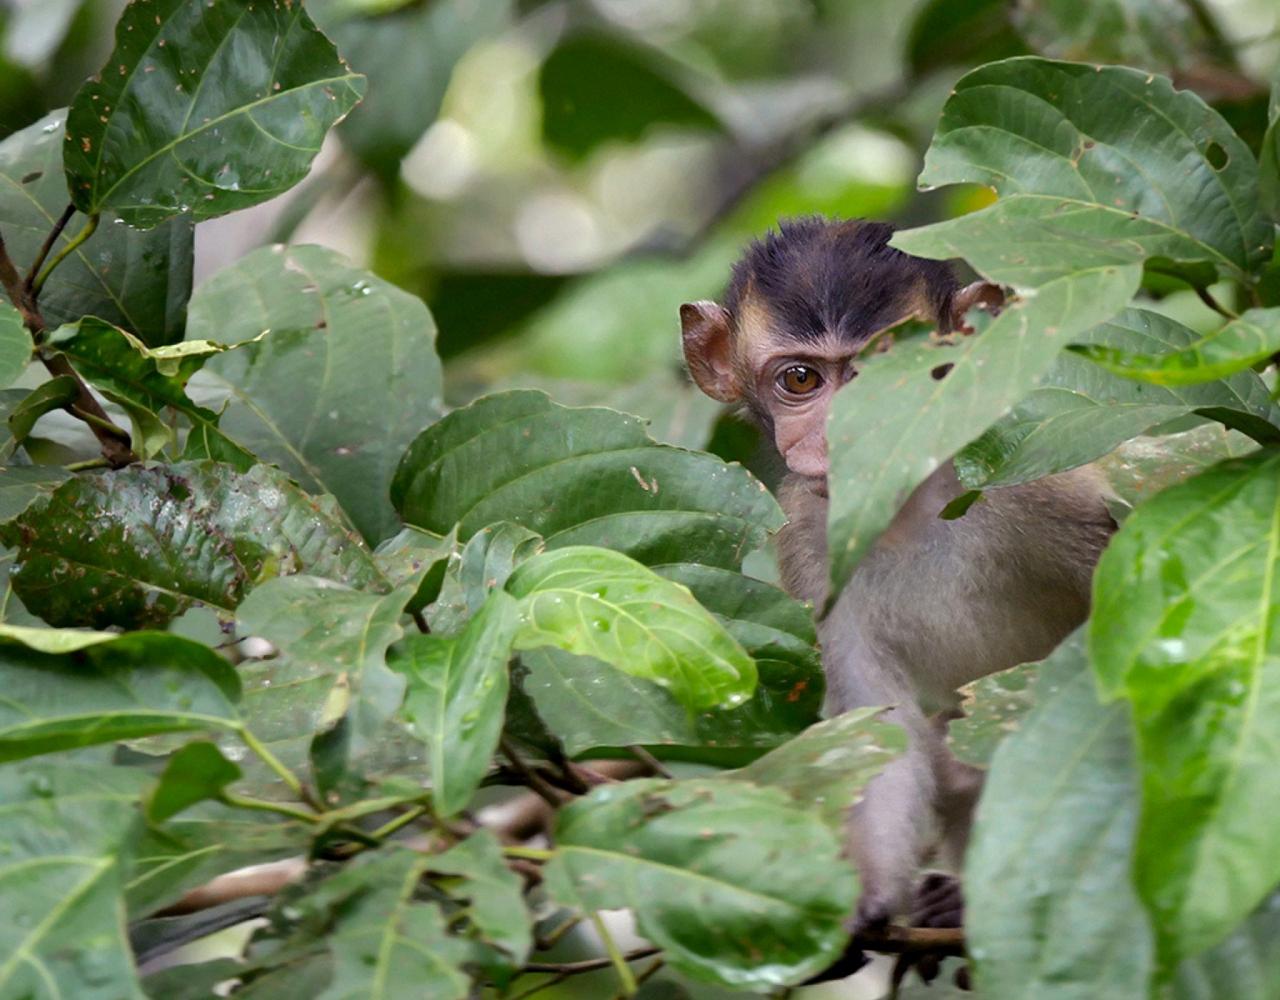 Borneo Birding, Wildlife and Nature tour with Naturalist Journeys, Southeast Asia, Birdwatching, Pygmy Elephant, Orangutan, Gliding Tree Frogs and Endemic Birds